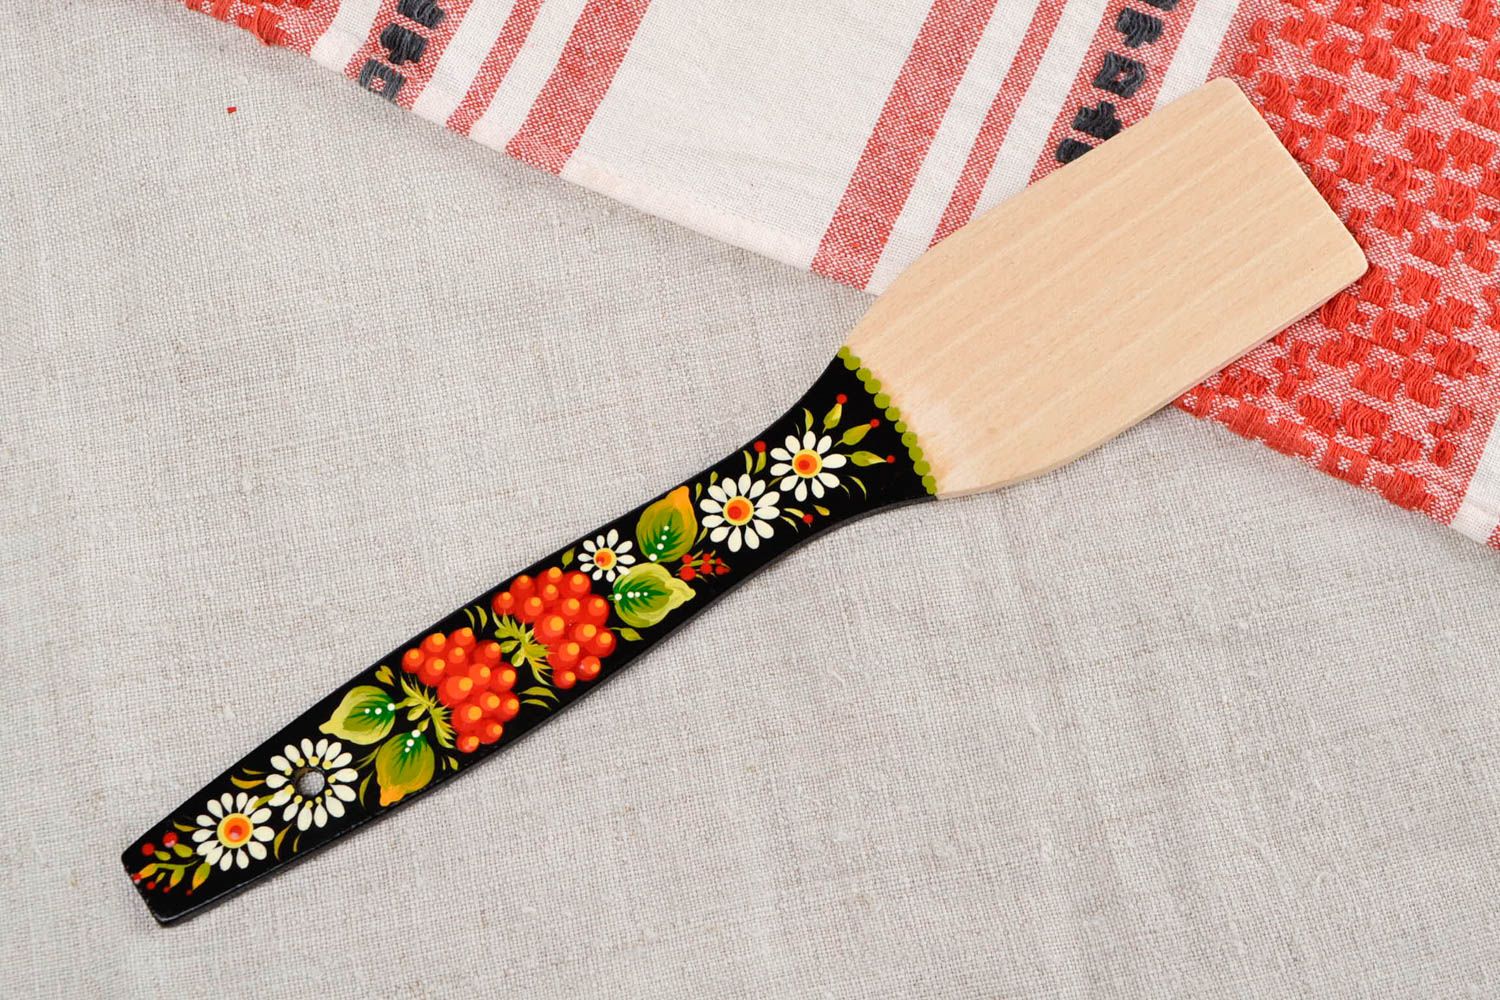 Handmade painted wooden spatula wood craft kitchen supplies interior decorating photo 1